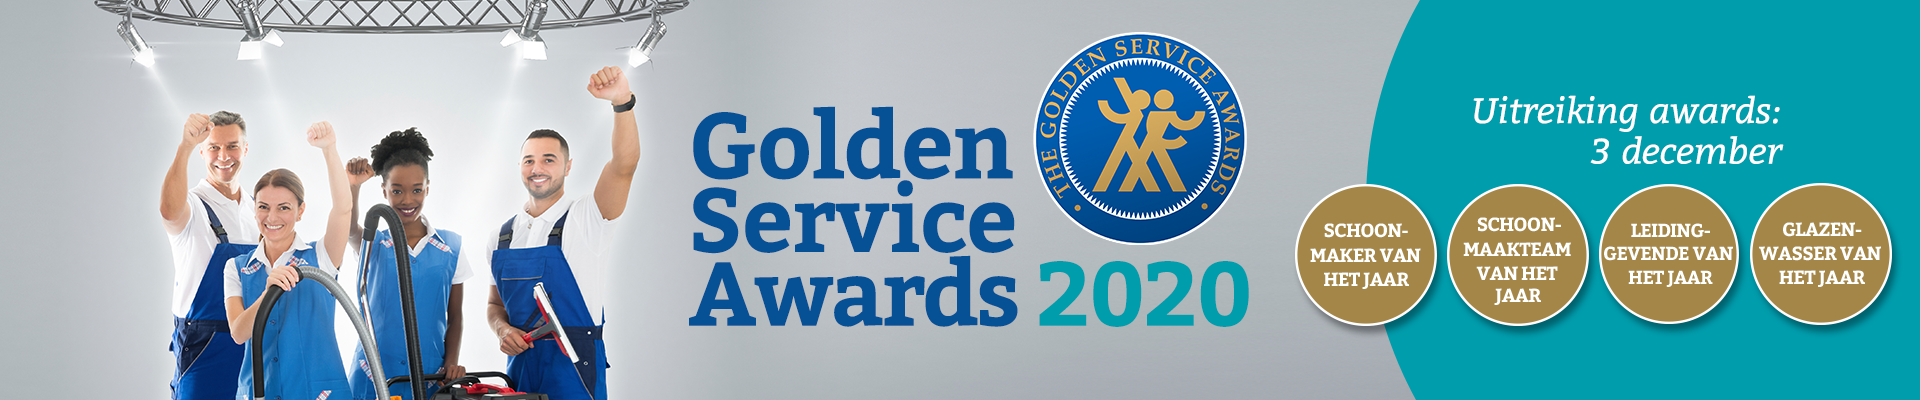 Golden Service Awards 2020